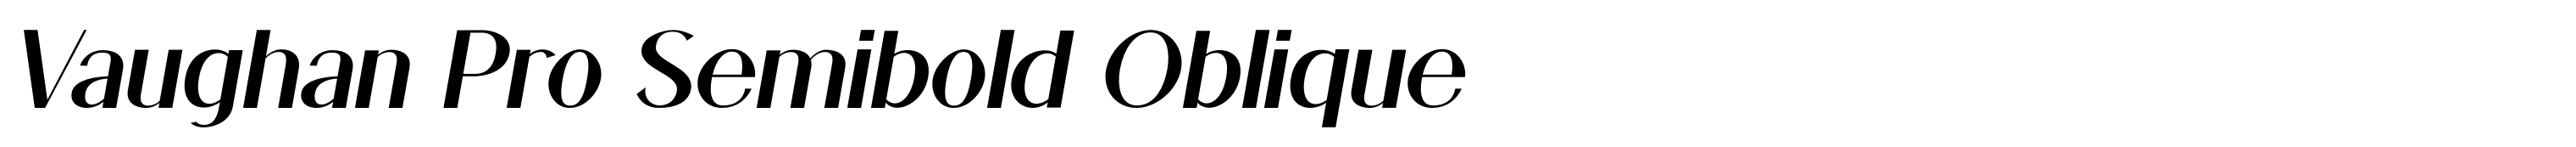 Vaughan Pro Semibold Oblique